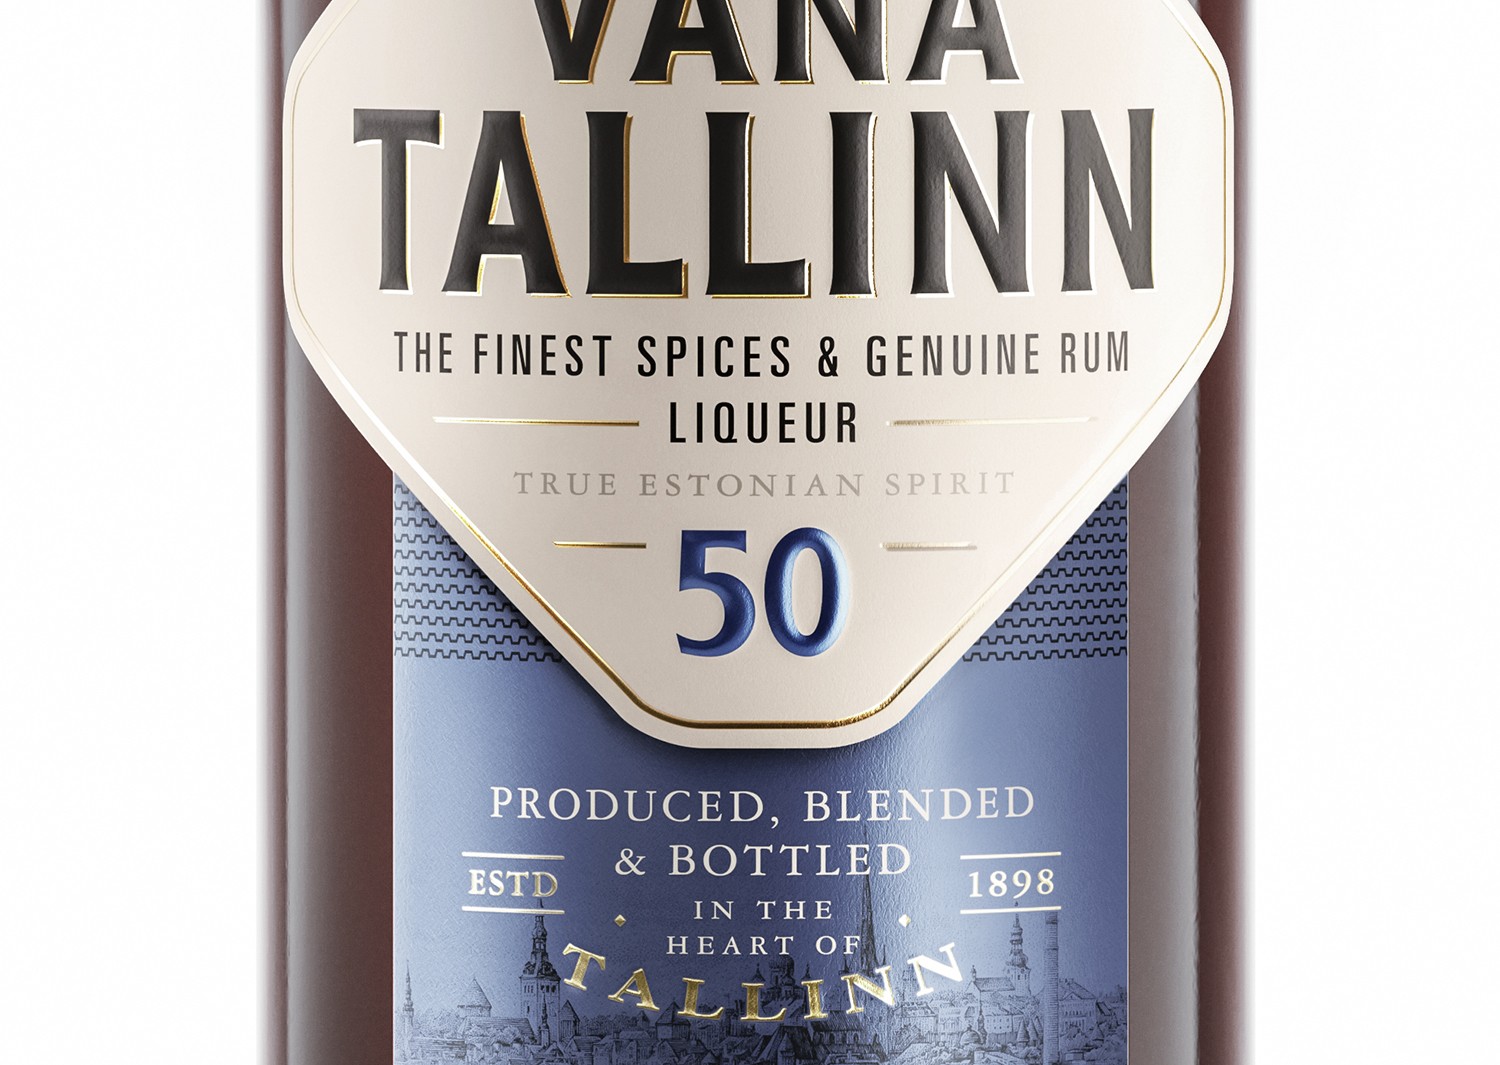 Appartement 103 has Redesigned Vana Tallinn, the Legendary Estonian Liqueur Brand